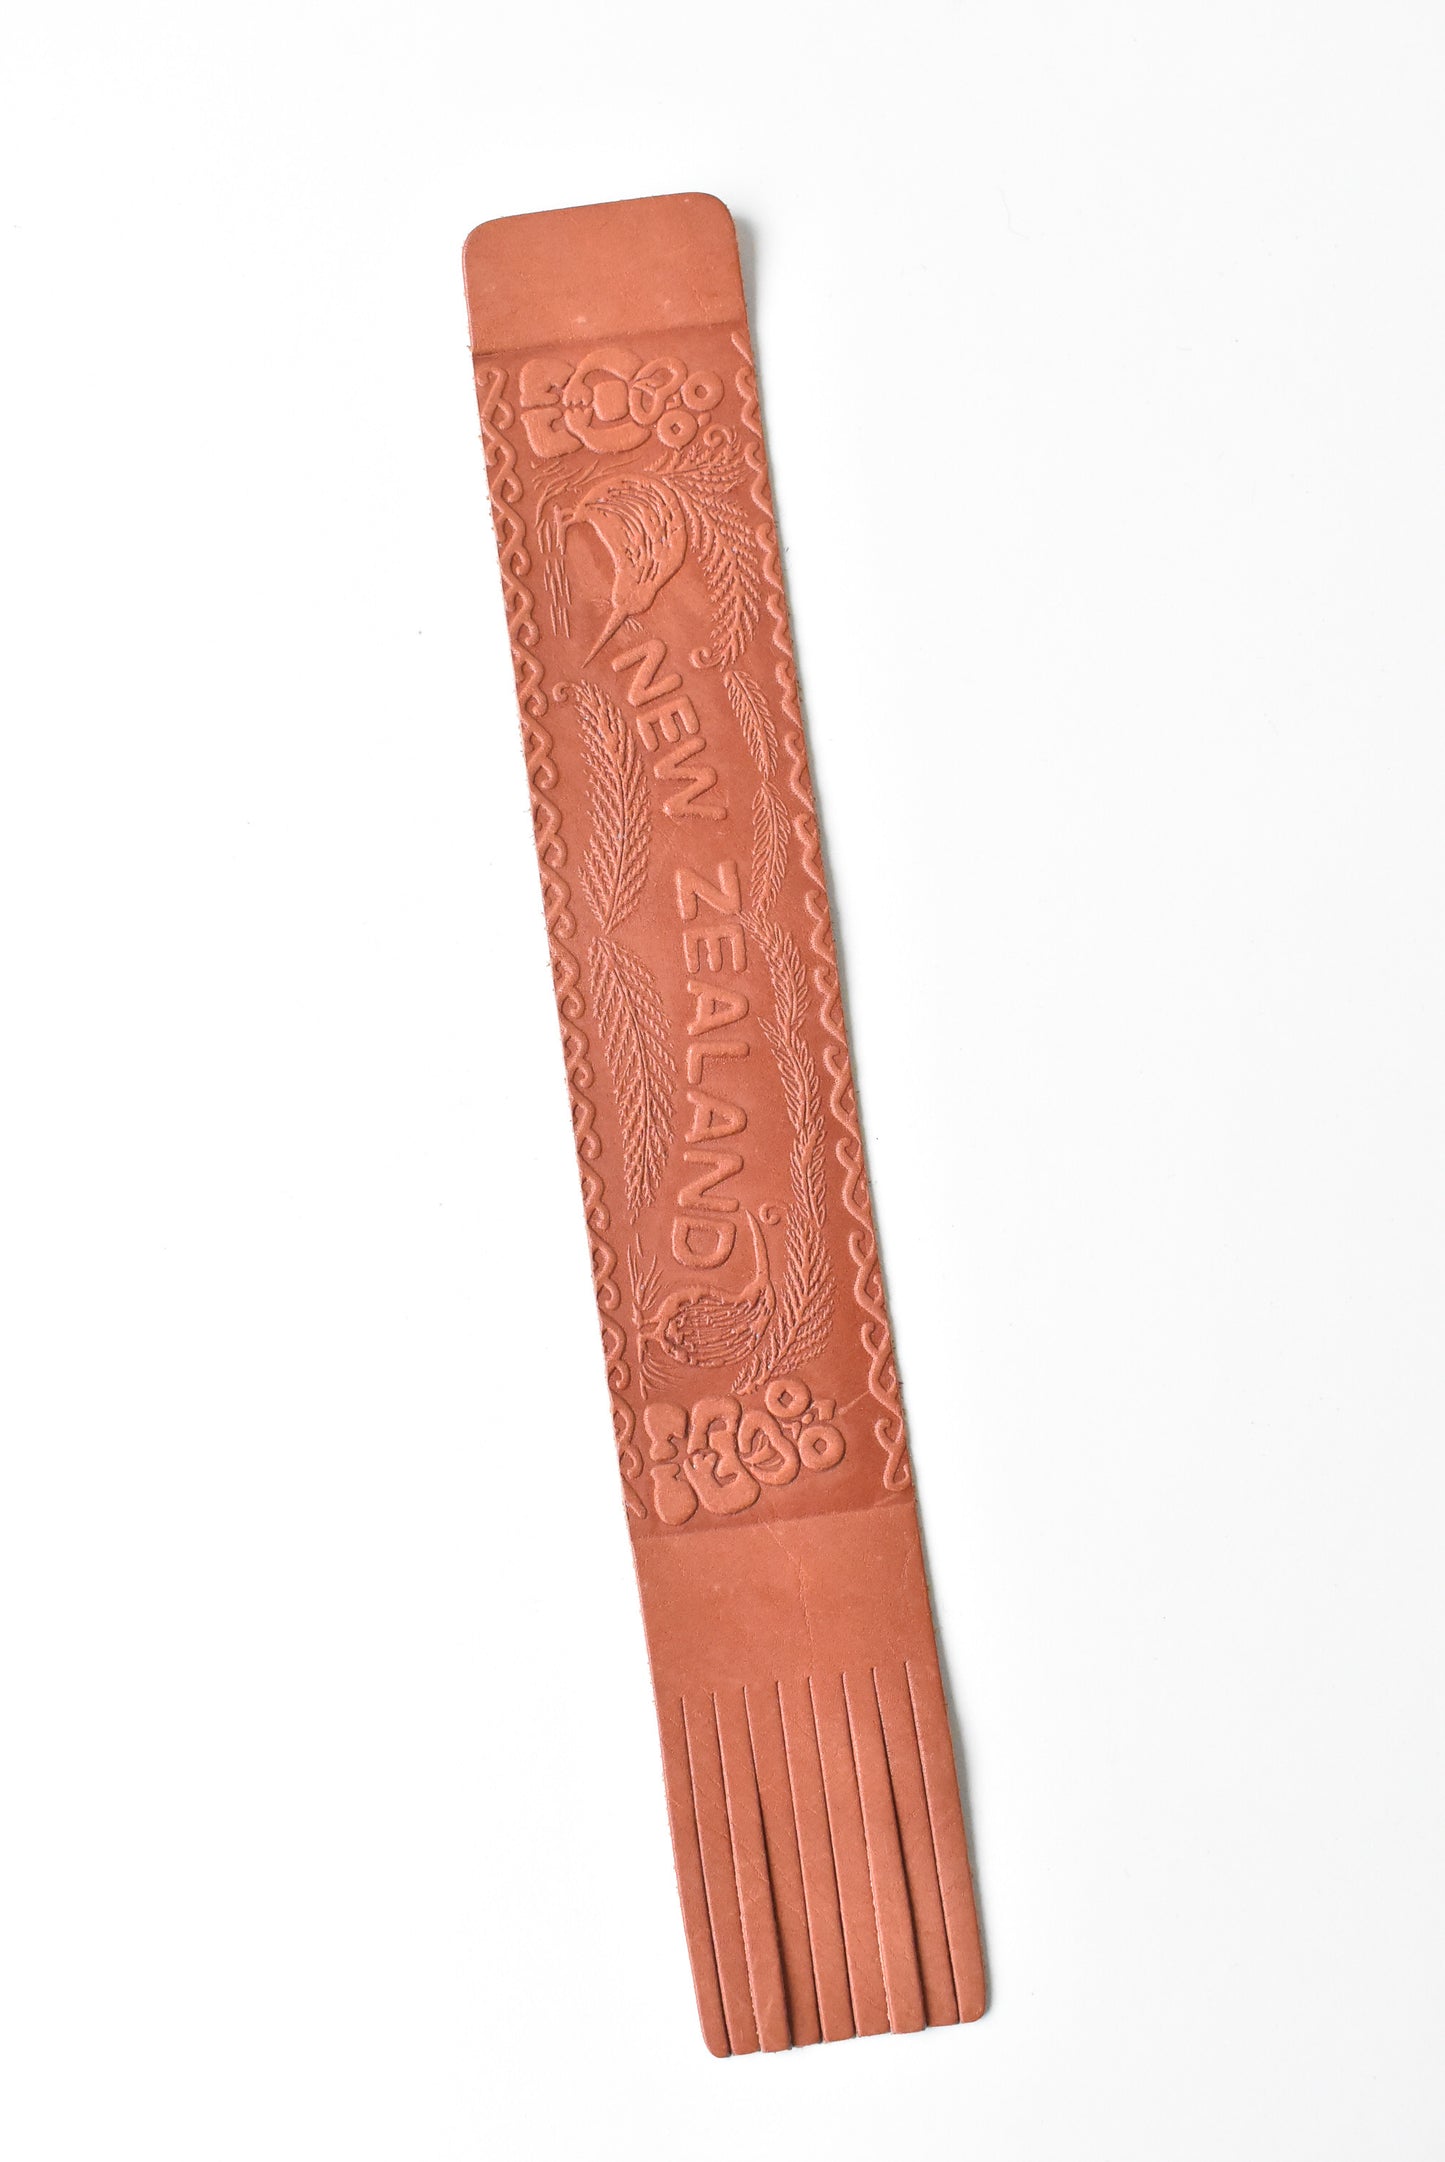 Kiwiana embossed brown leather bookmark